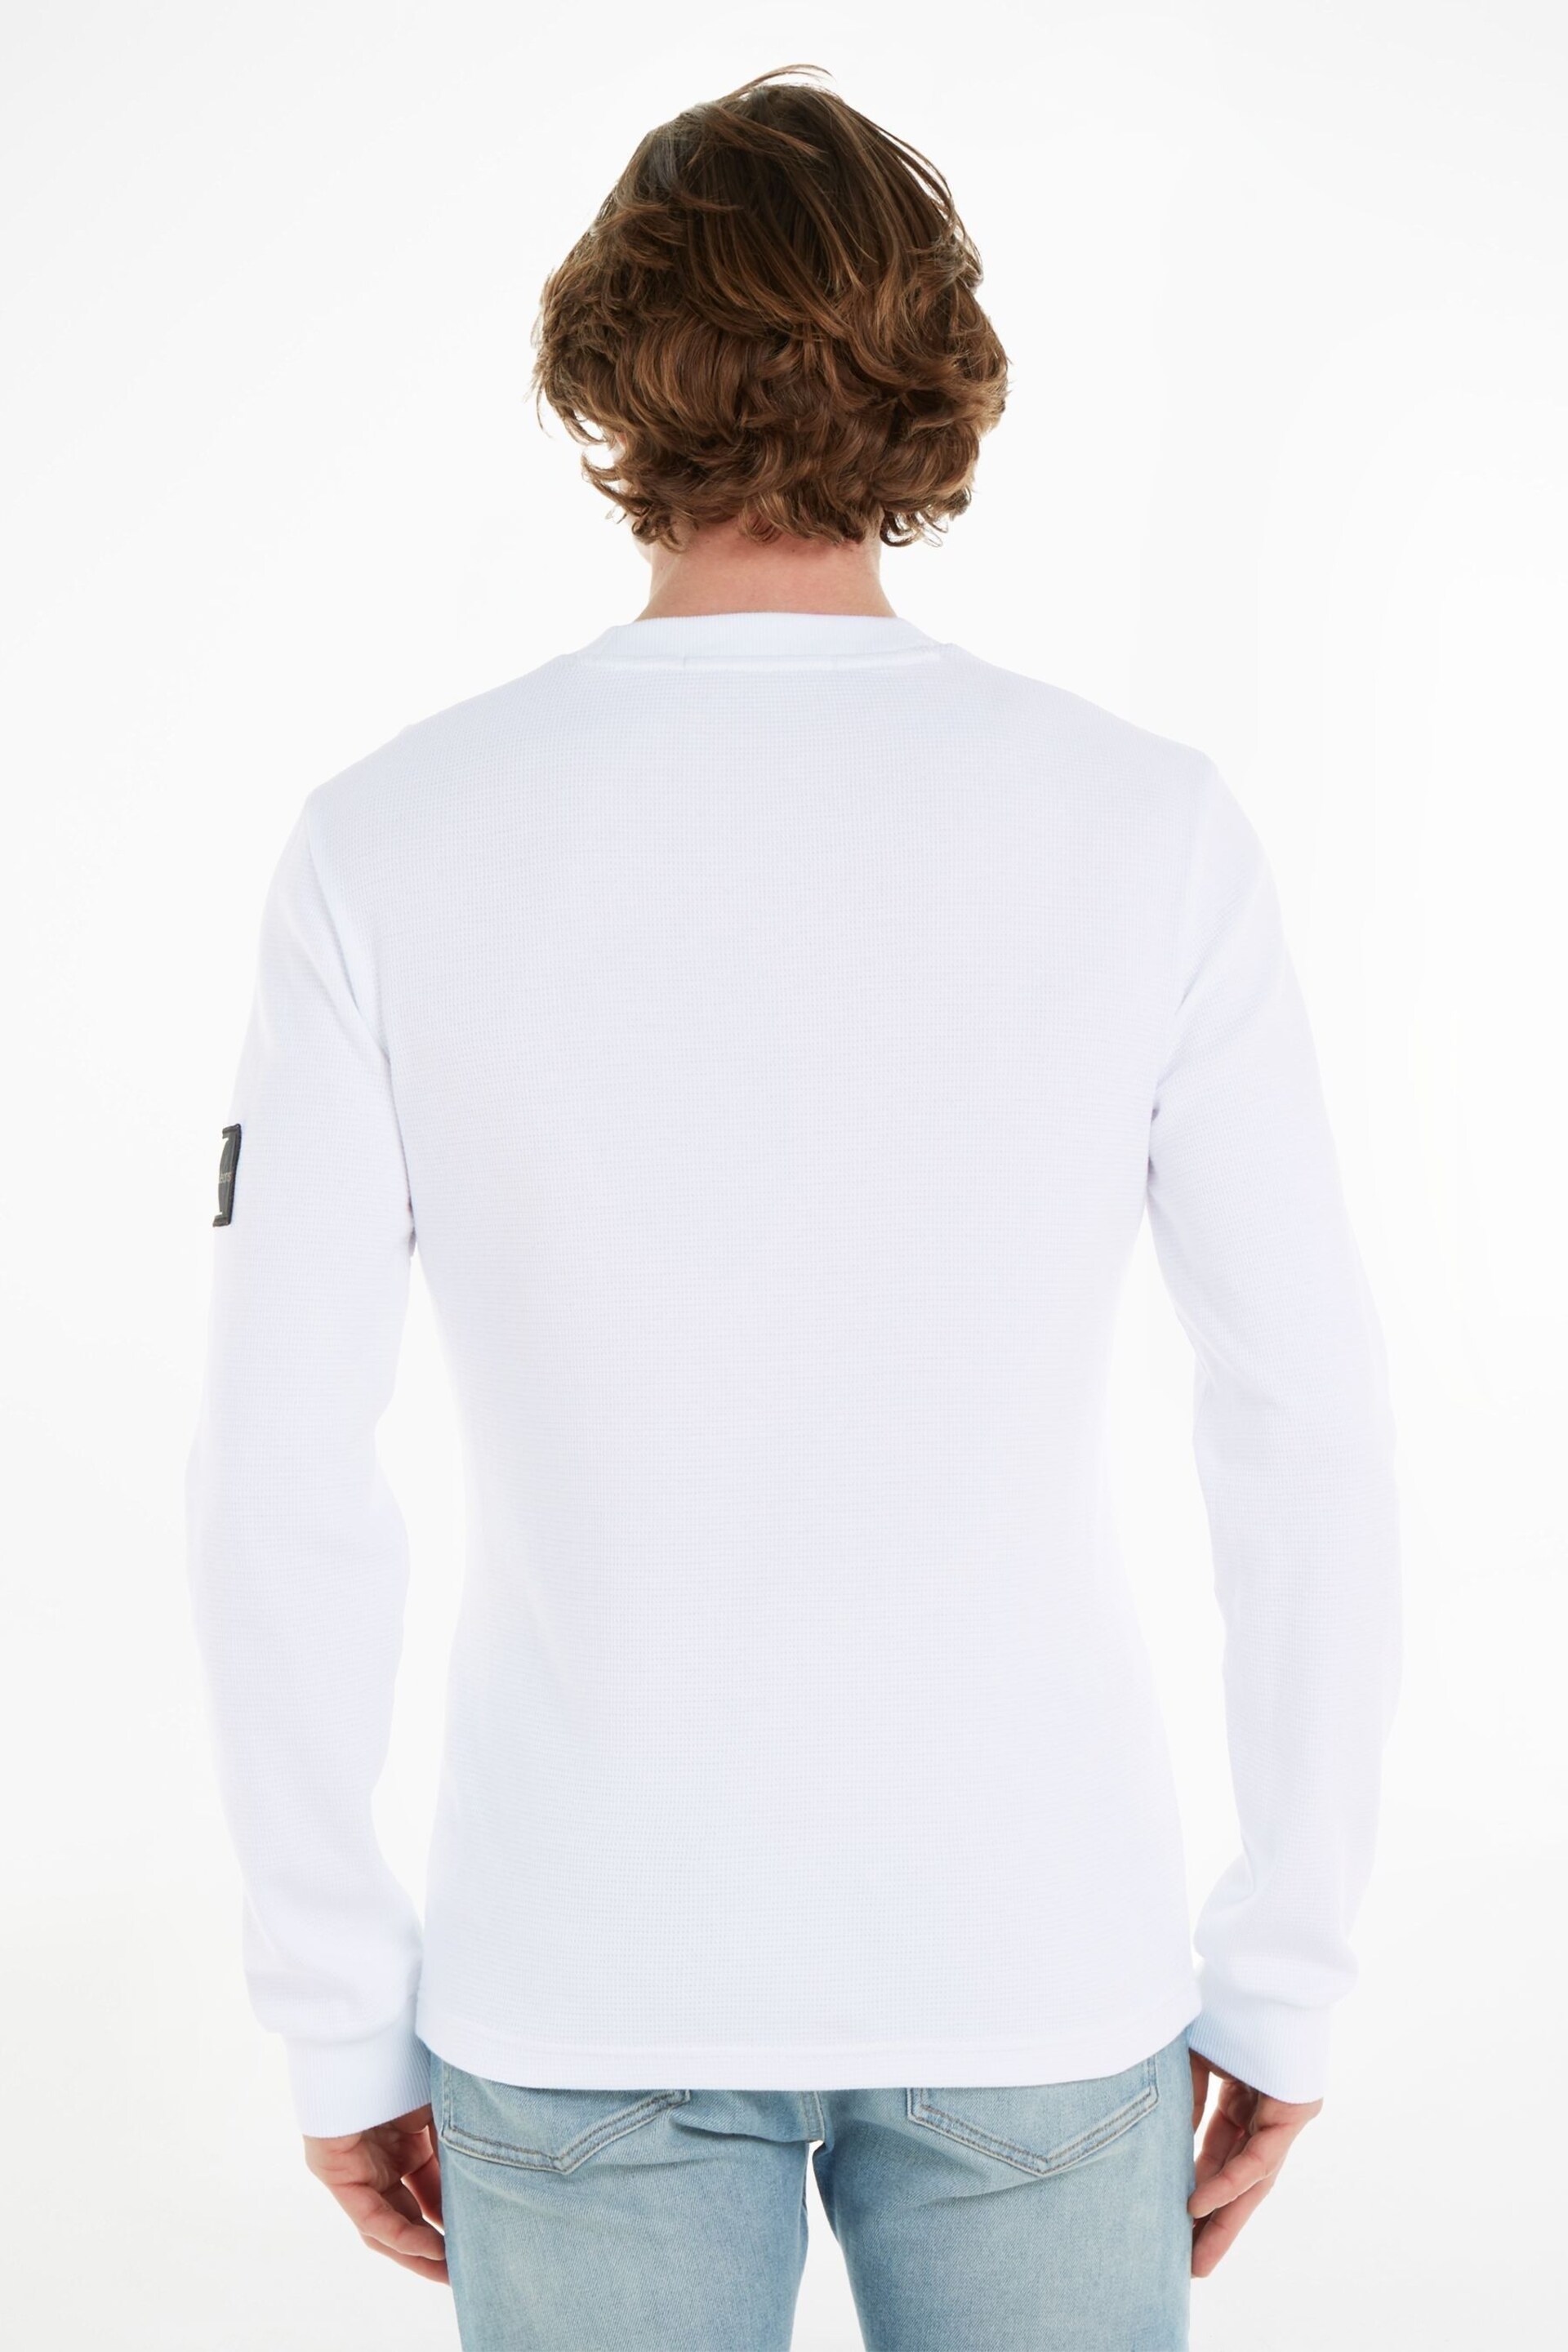 Calvin Klein Jeans Monogram Badge Waffle Long Sleeve White T-Shirt - Image 2 of 6